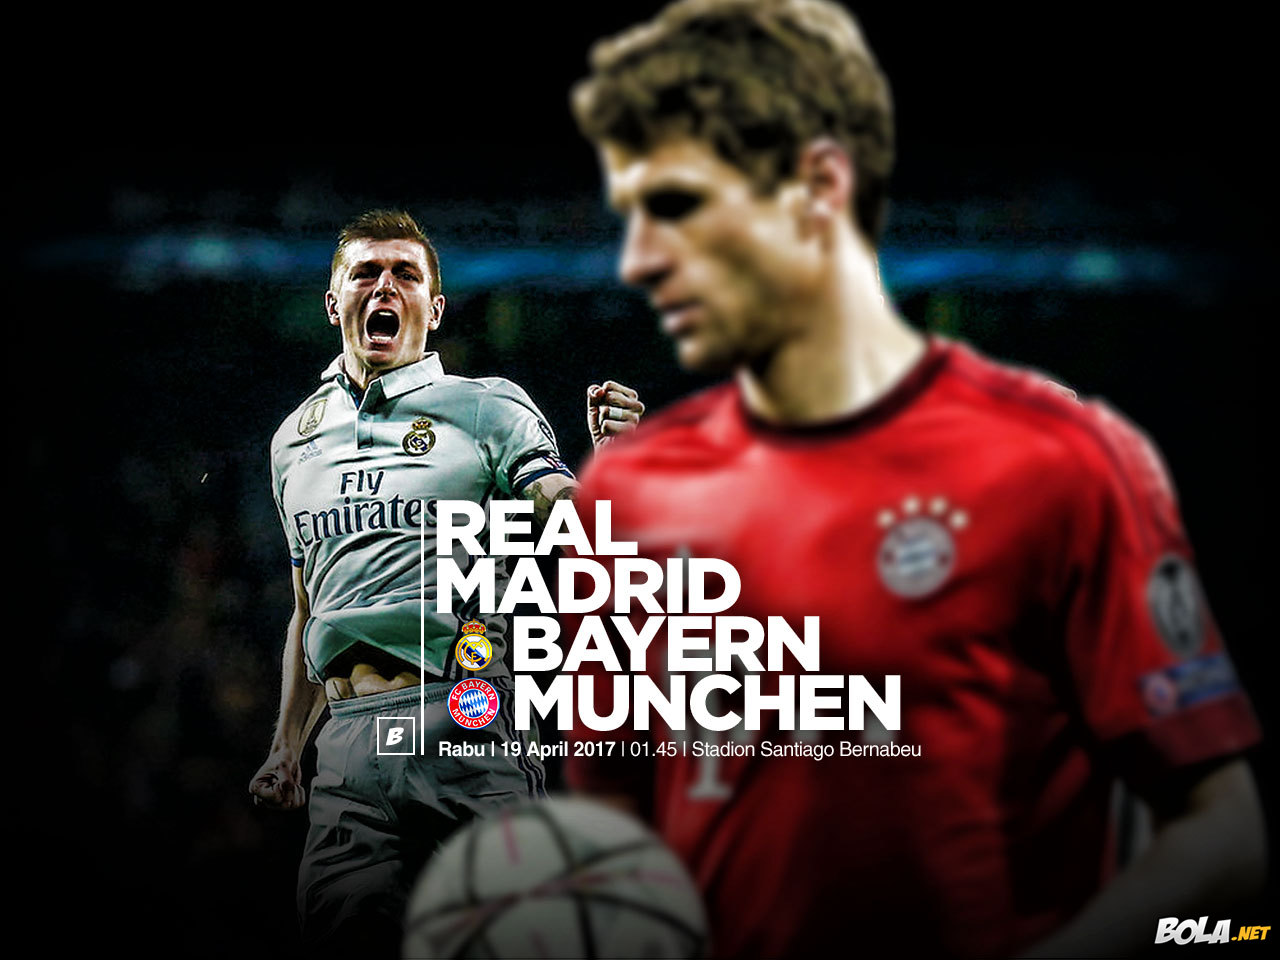 Download Wallpaper Real Madrid Vs Bayern Munchen Bolanet